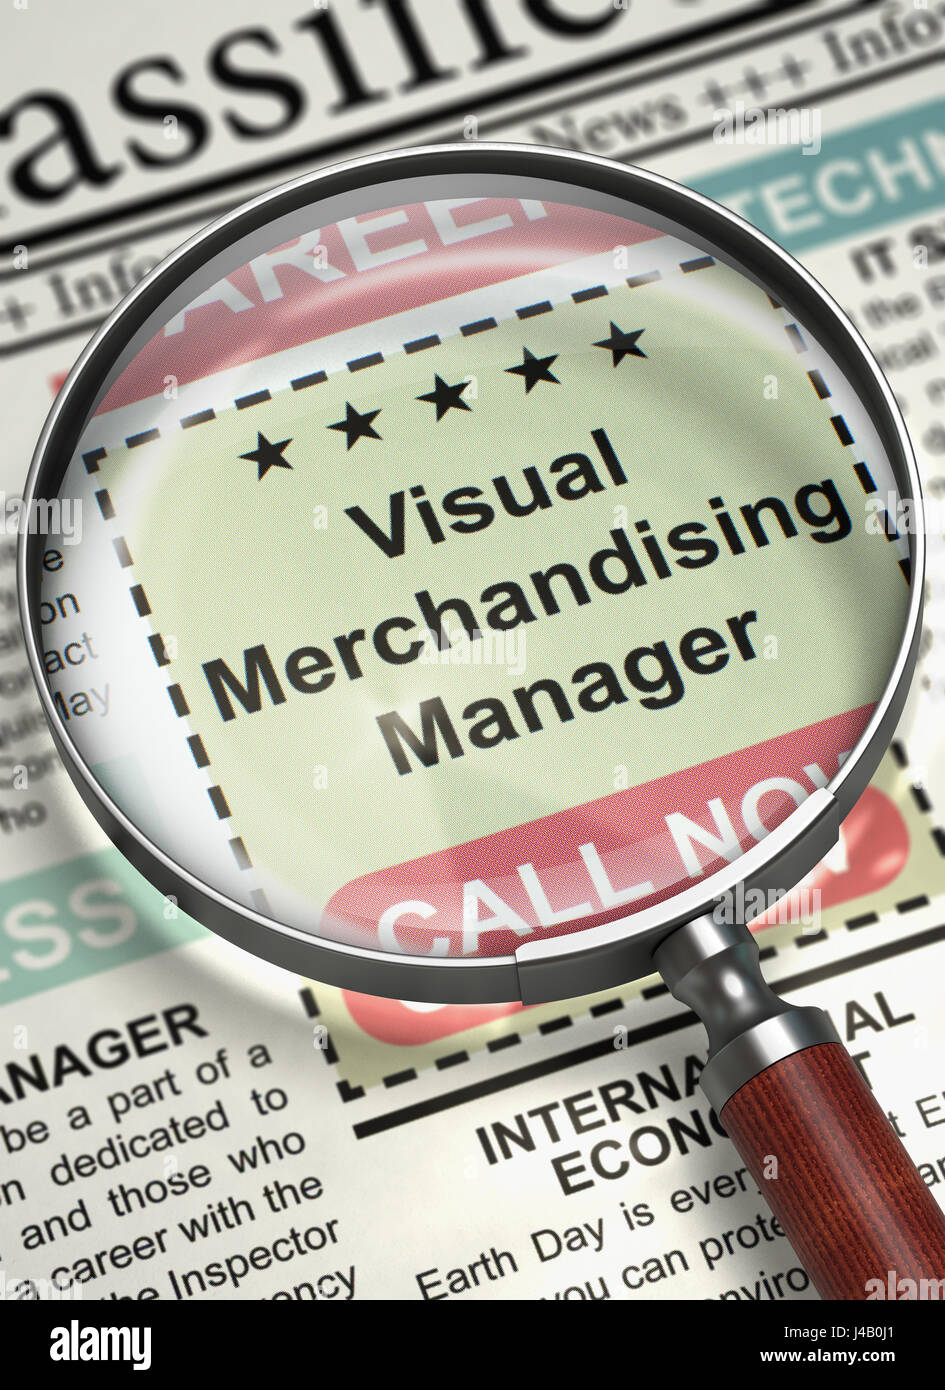 Job Opening Visual Merchandising Manager. 3D. Stock Photo